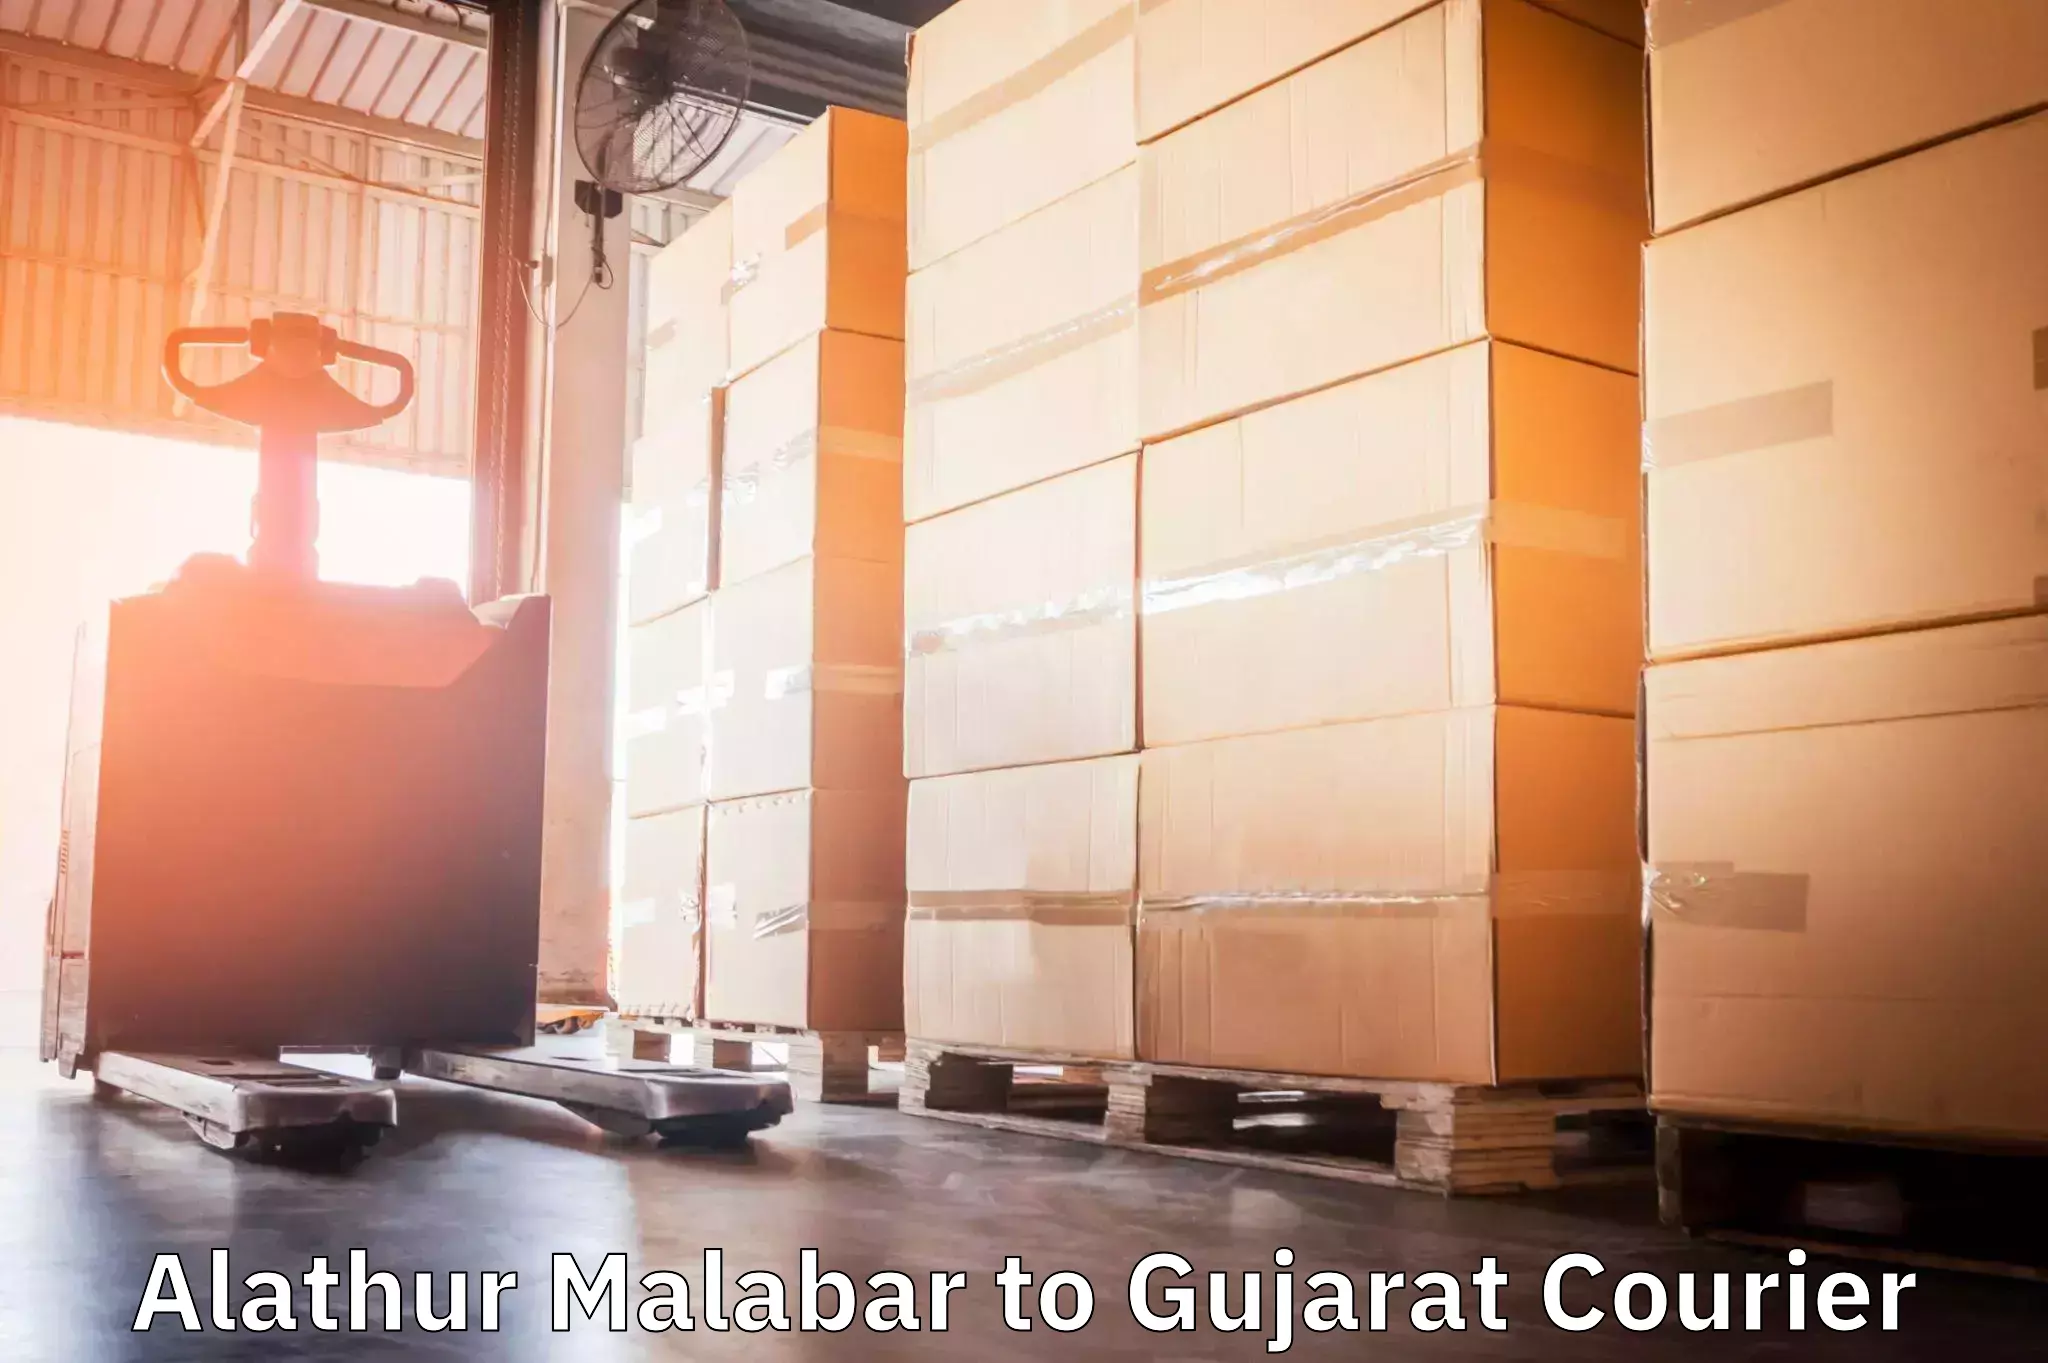 Door-to-door freight service Alathur Malabar to Dwarka